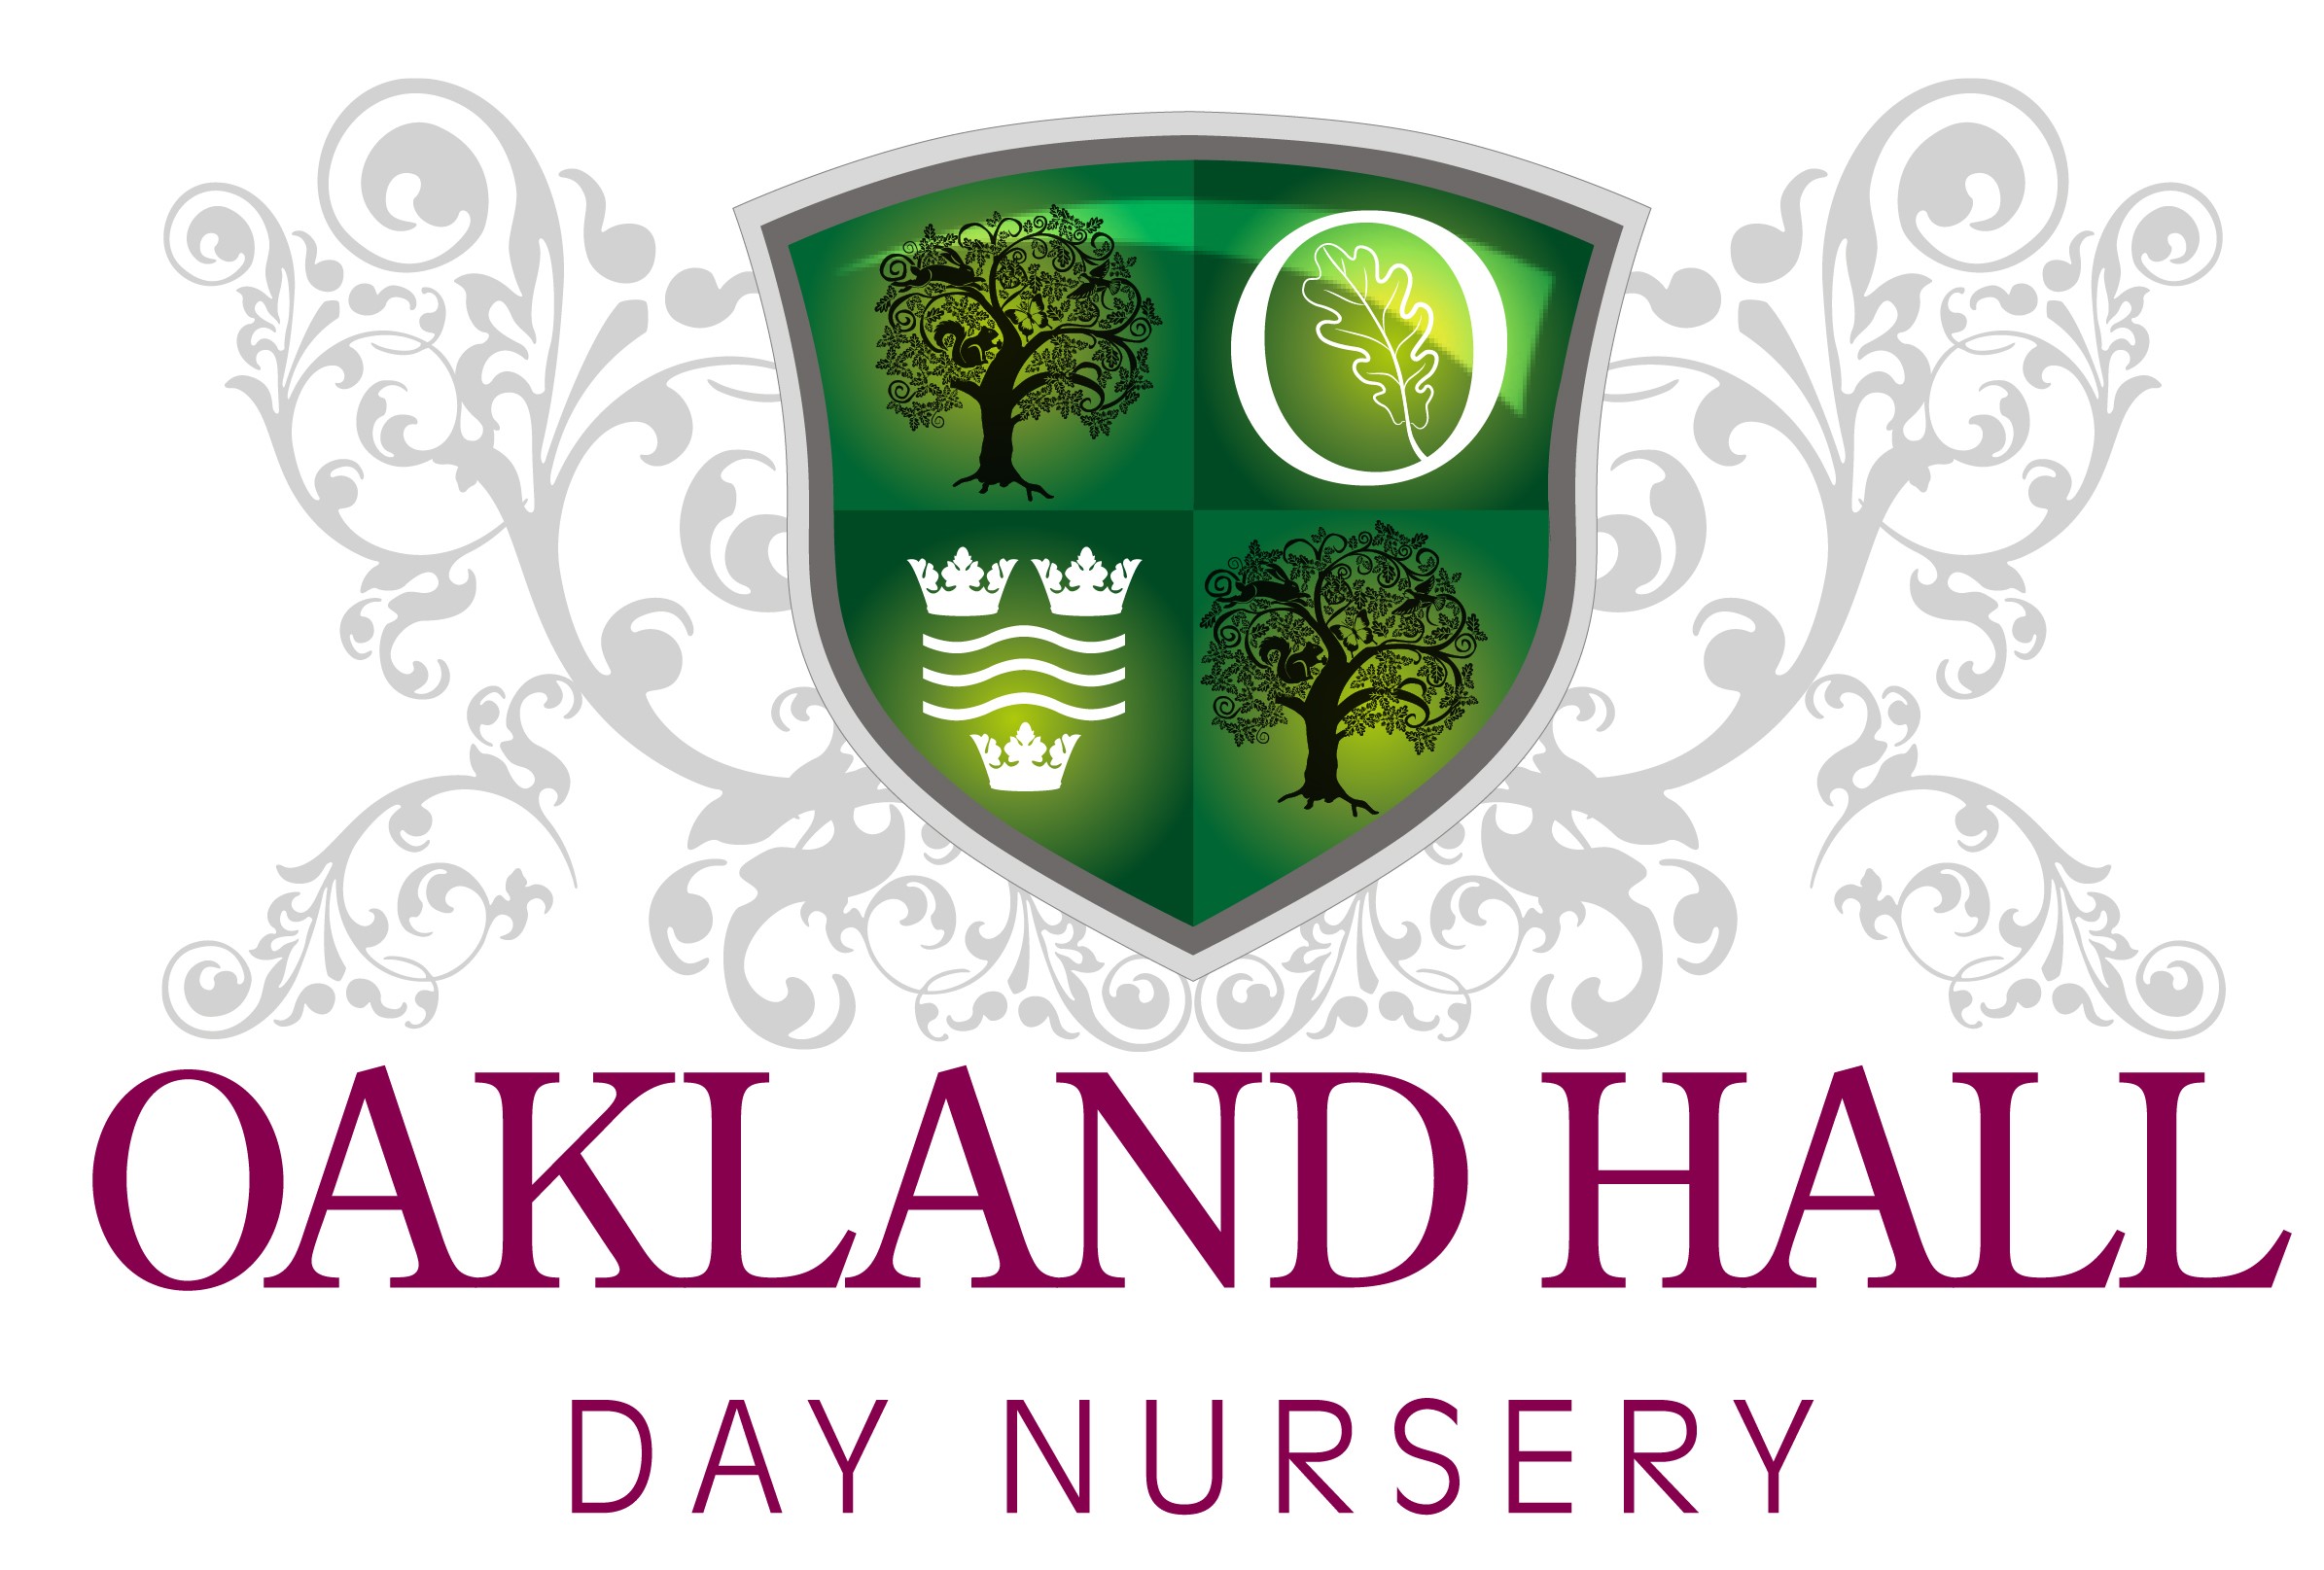 Oakland Hall Day Nursery